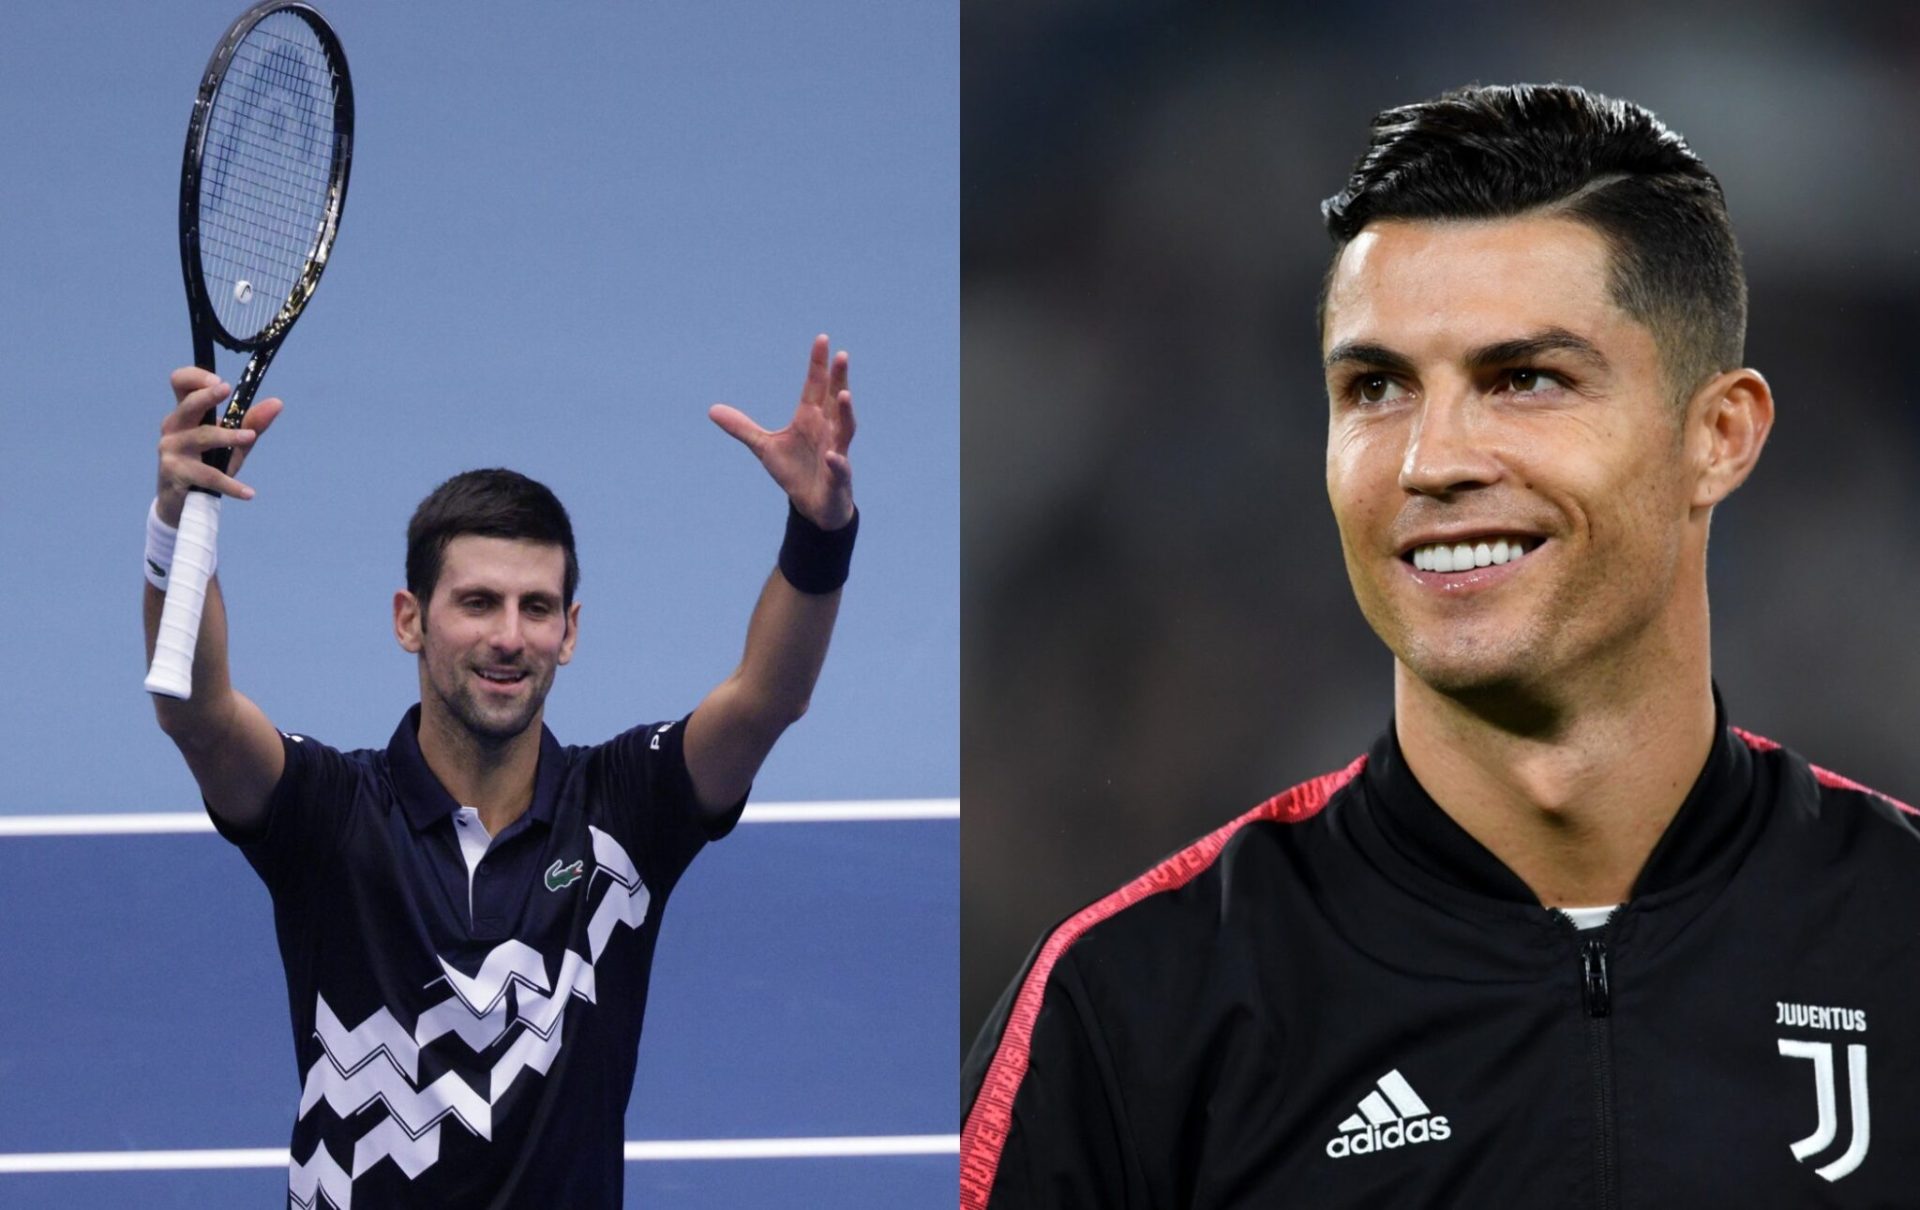 Tennis Ace Novak Djokovic Copies Ronaldo's Celebration